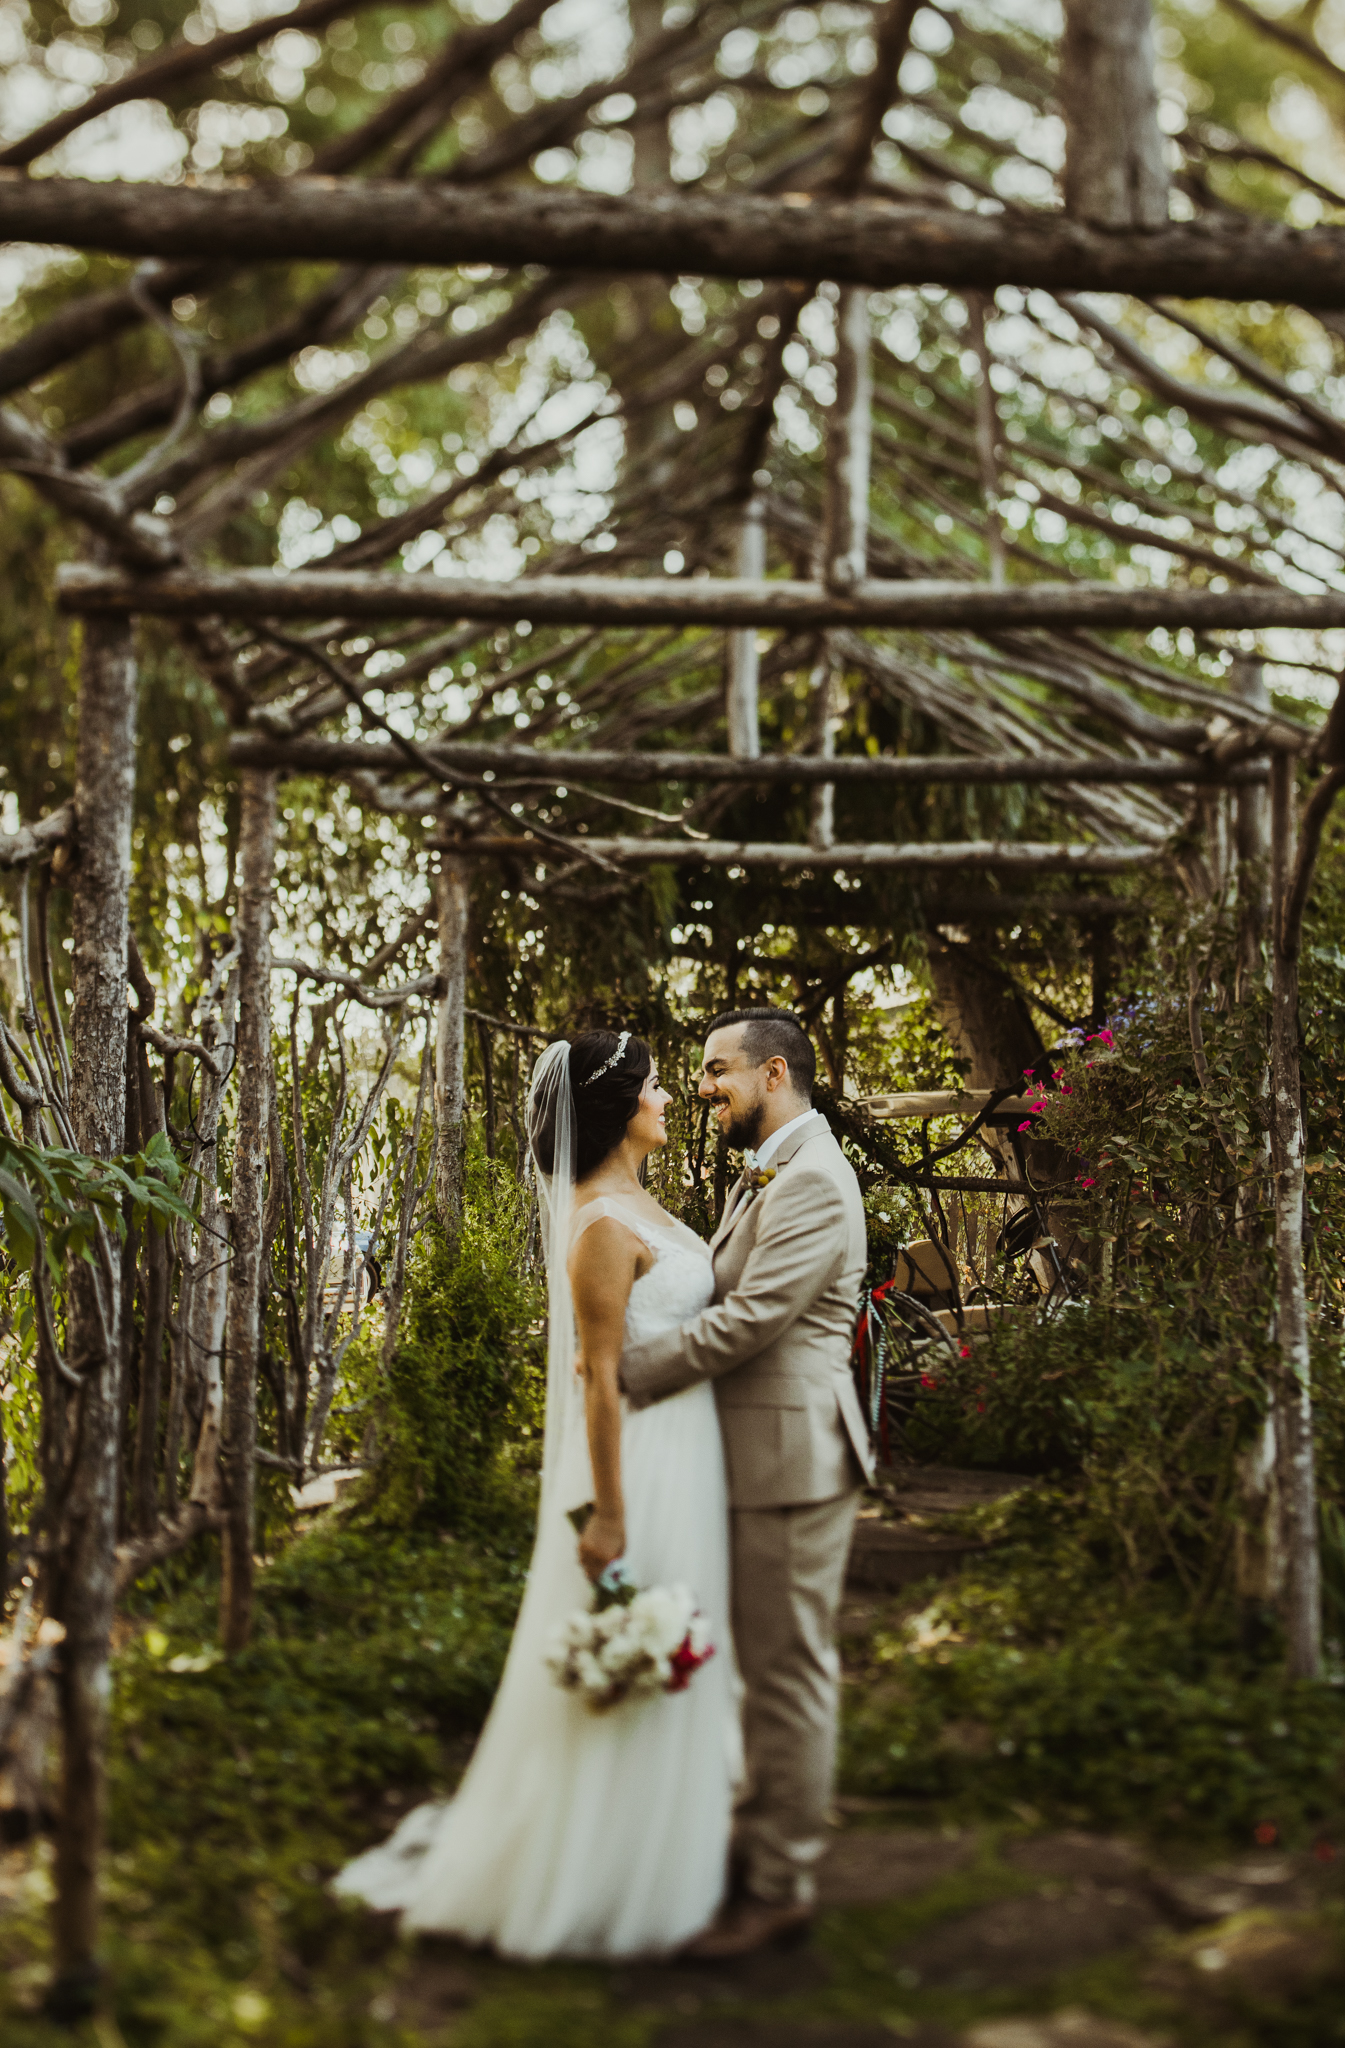 ©Isaiah + Taylor Photography - Brendan + Stefana, Quail Haven Farm Wedding, Vista-93.jpg